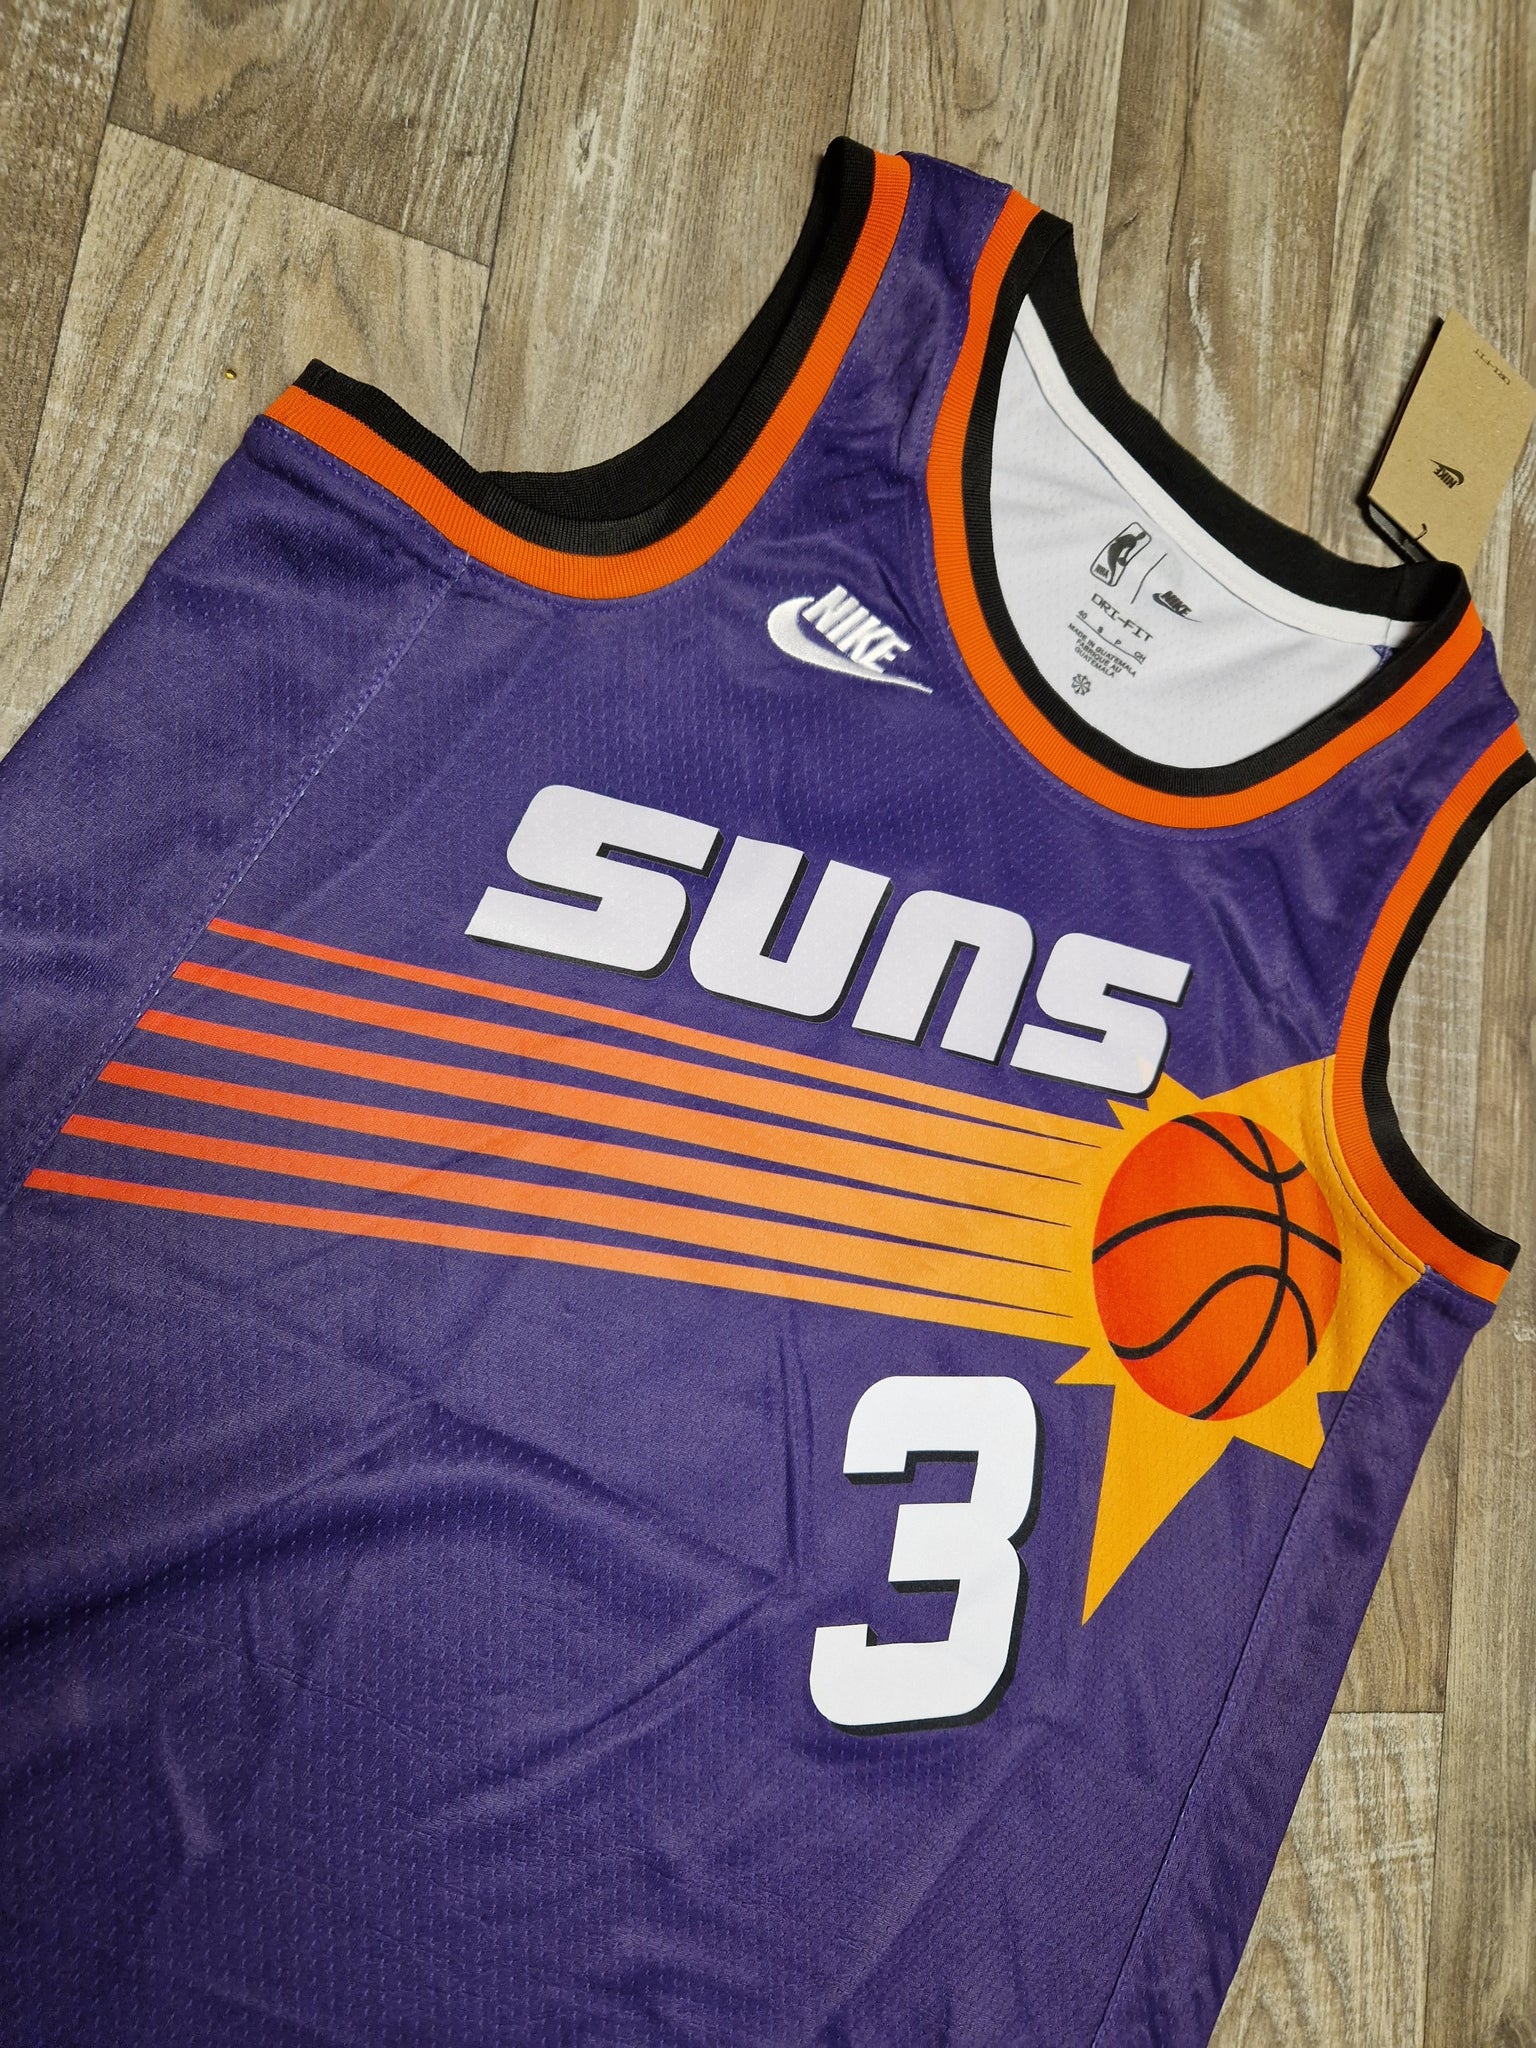 Suns Chris Paul jersey Size 48. Fits medium/ - Depop